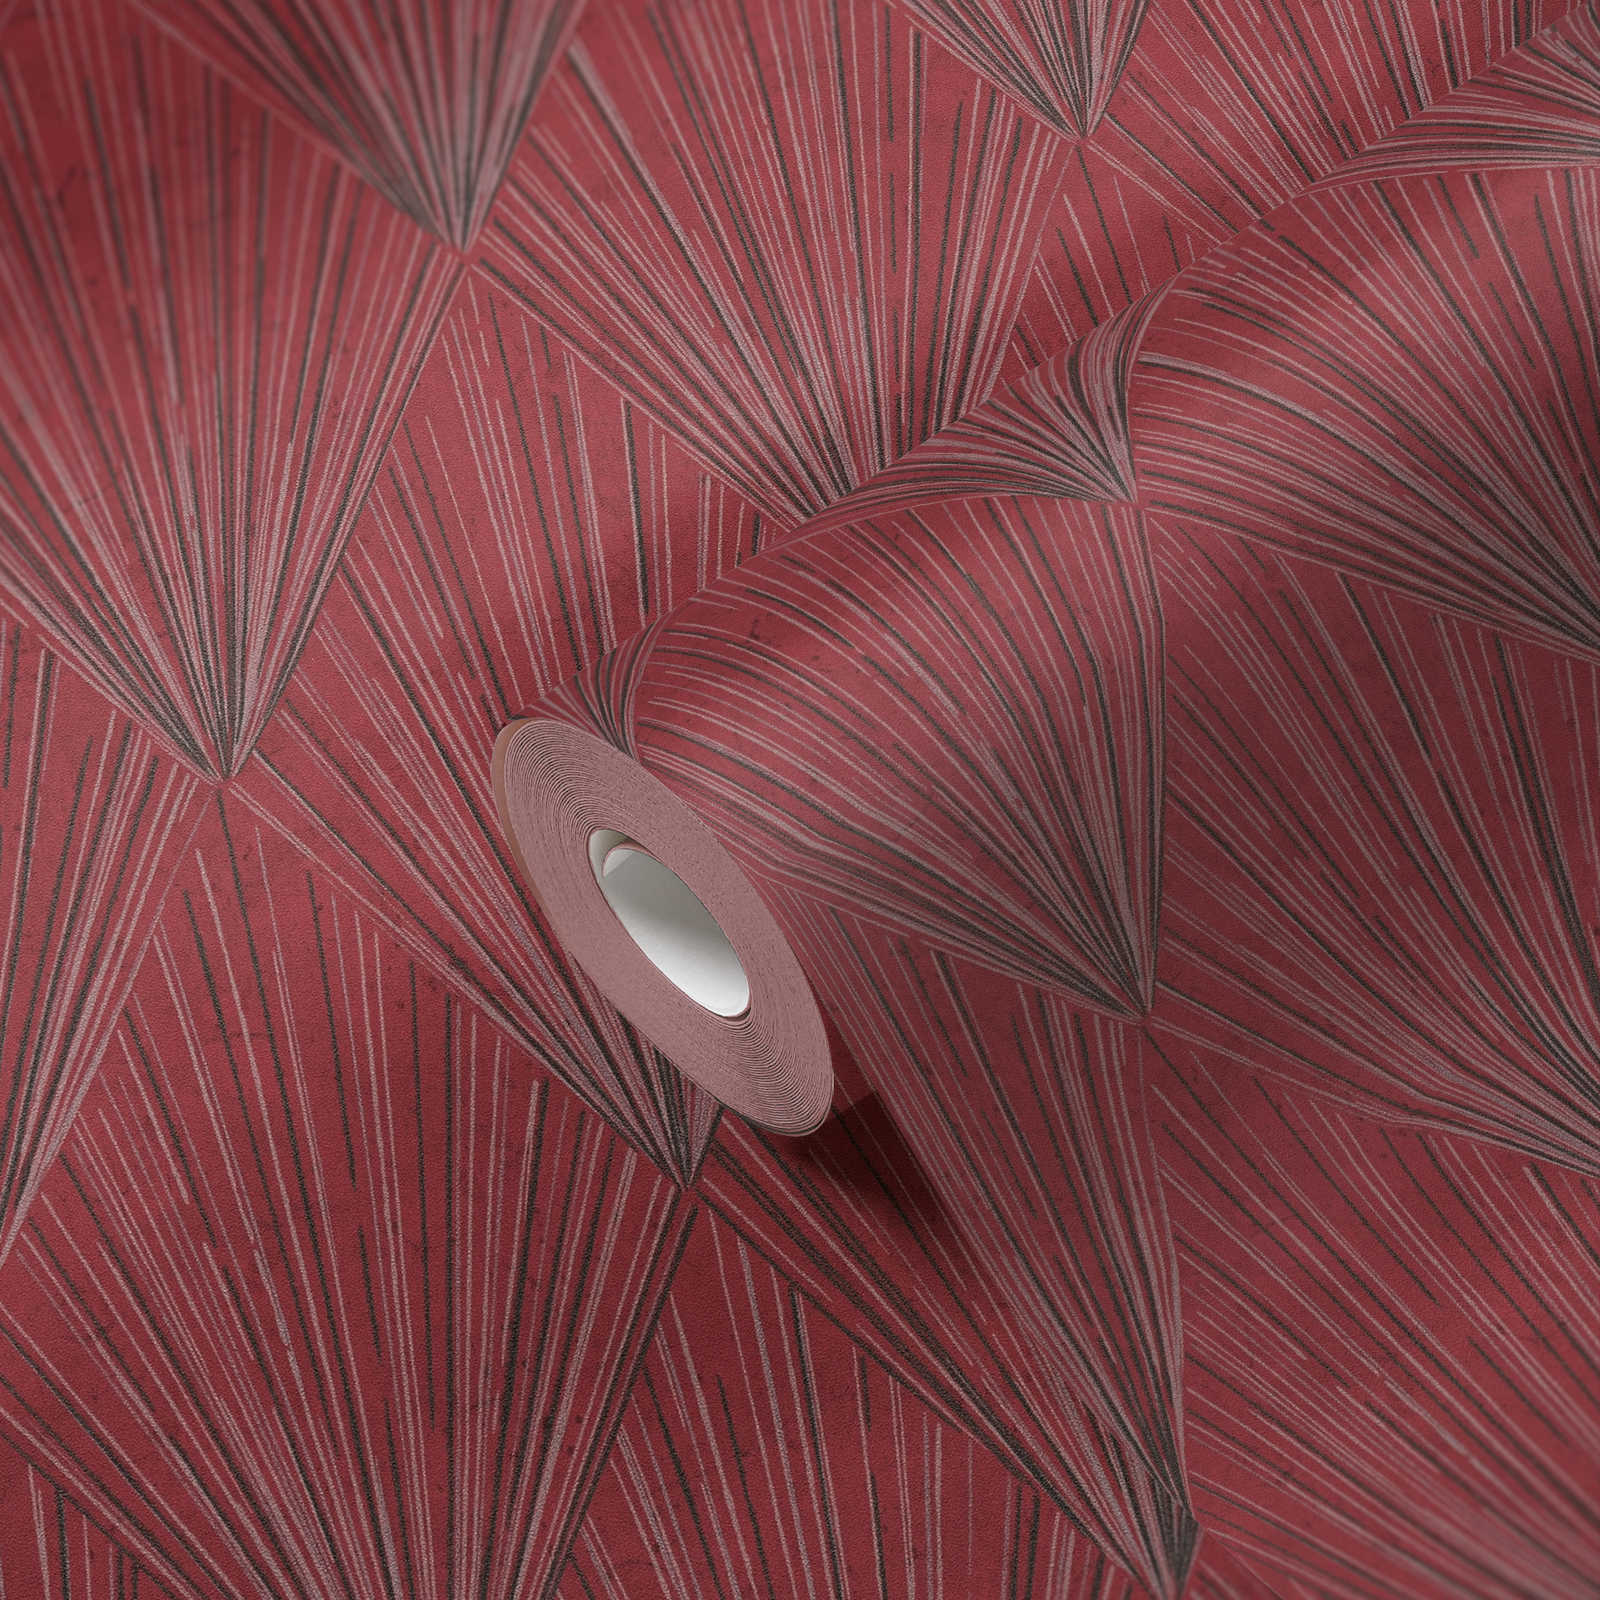             Tapete mit modernem Art Déco Muster & Metallic-Effekt – Metallic, Rot, Schwarz
        